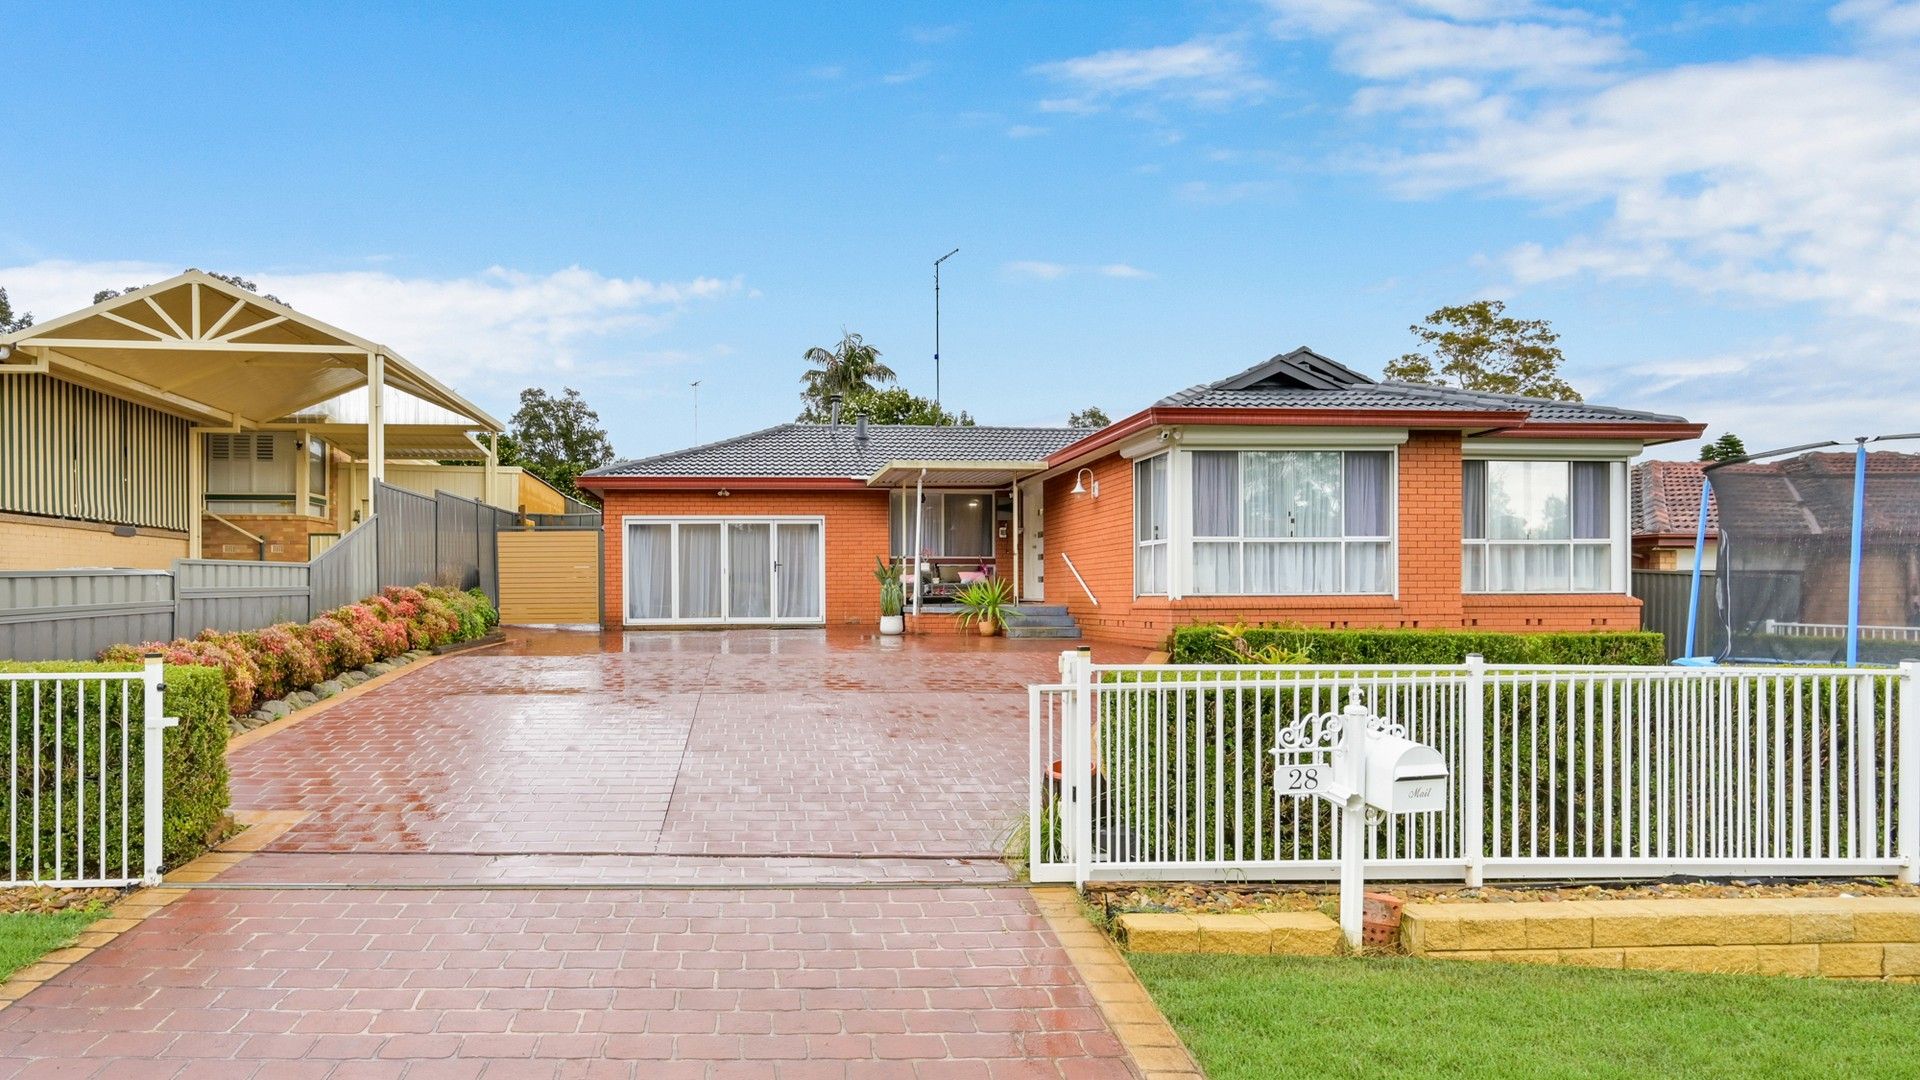 4 bedrooms House in 28 Guise Road BRADBURY NSW, 2560